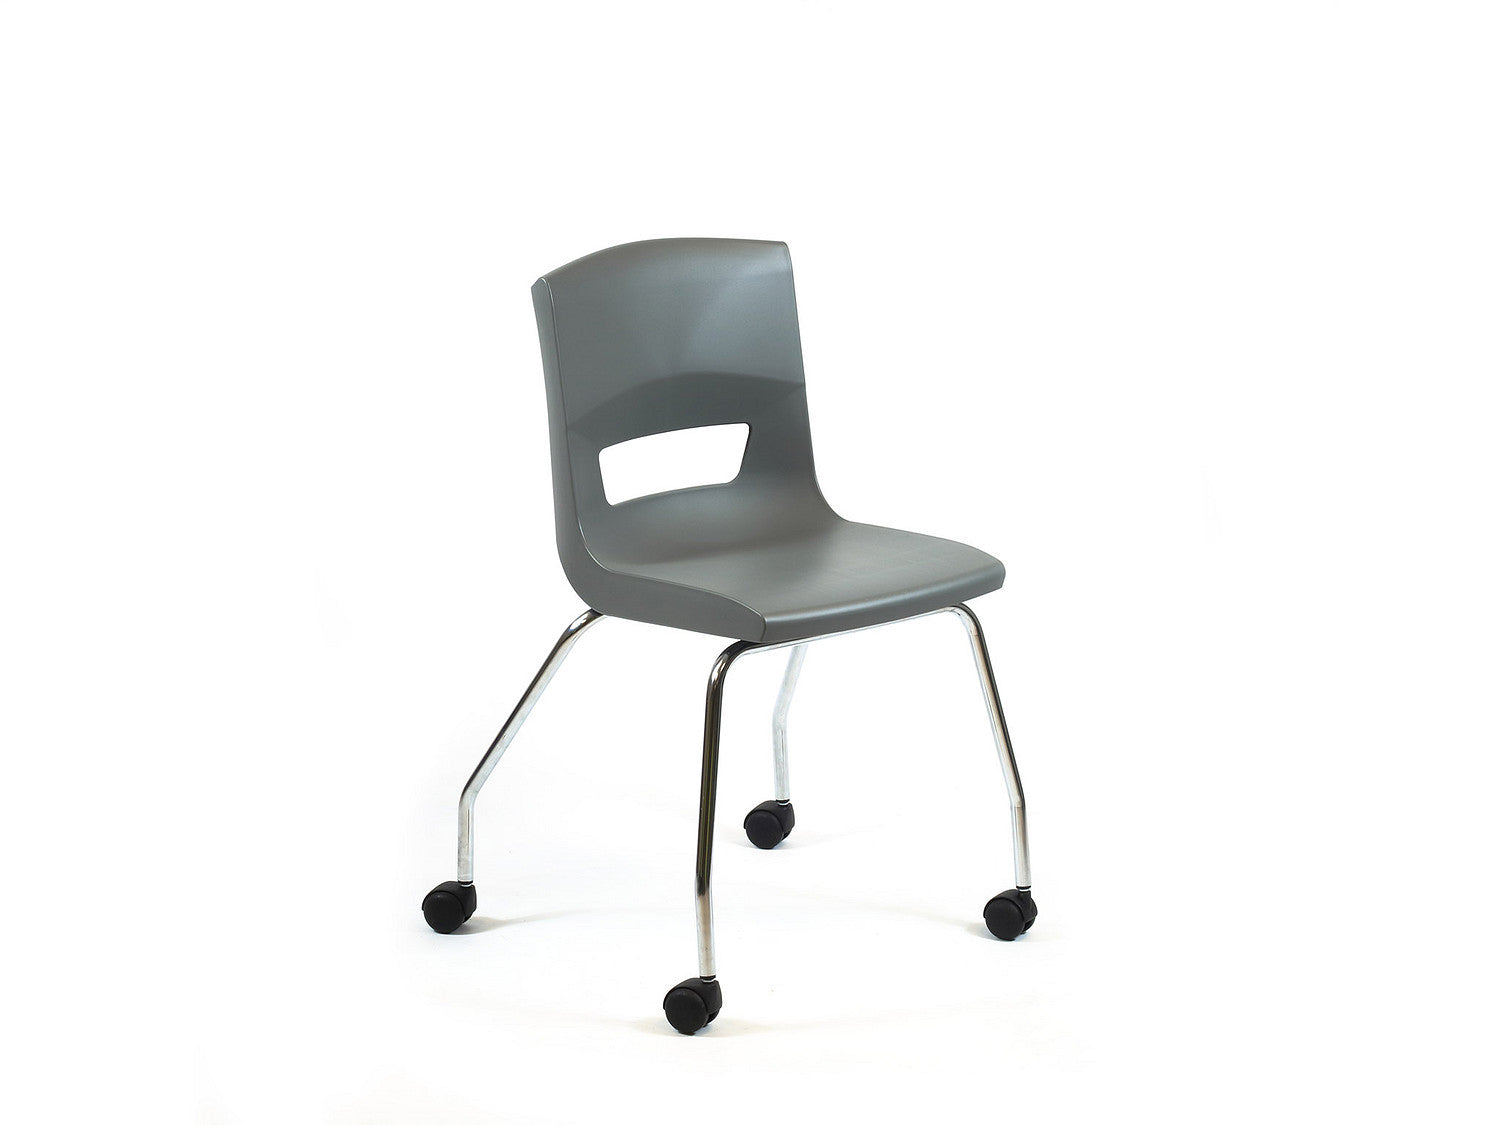 Postura 4 legs on castor unique stlye classroom chair iron grey